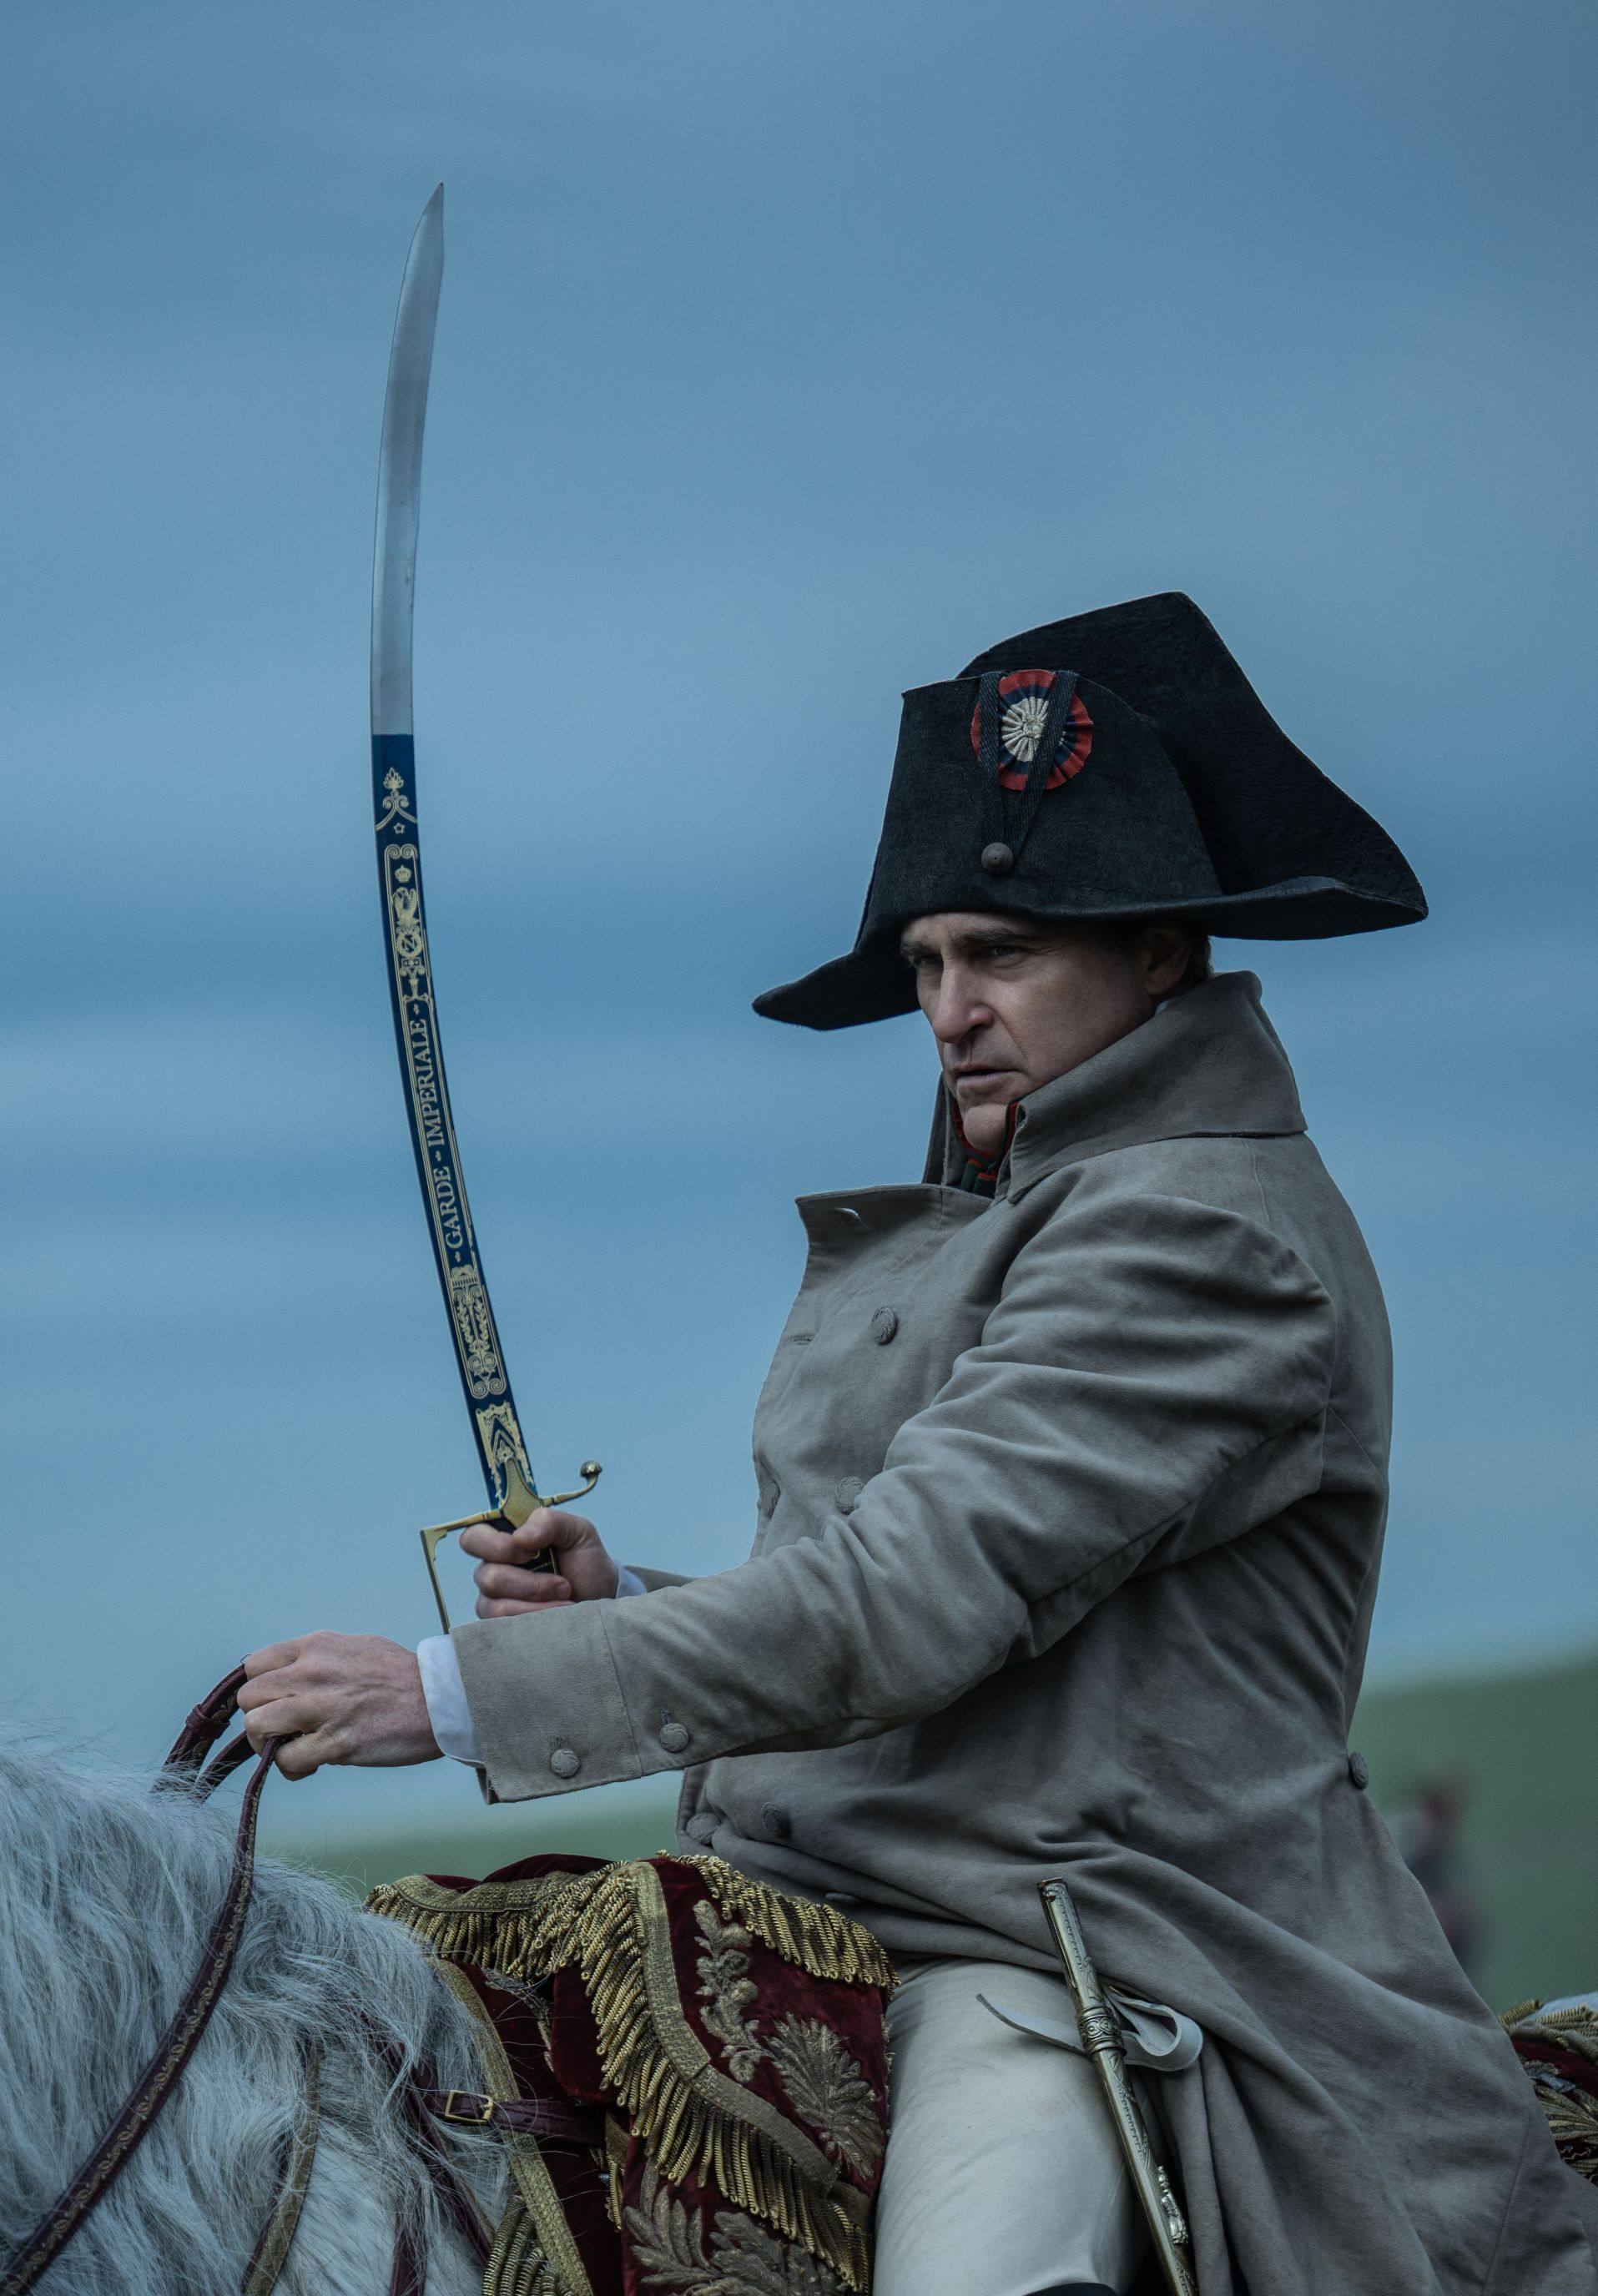 Joaquin Phoenix in a still from “Napoleon”.